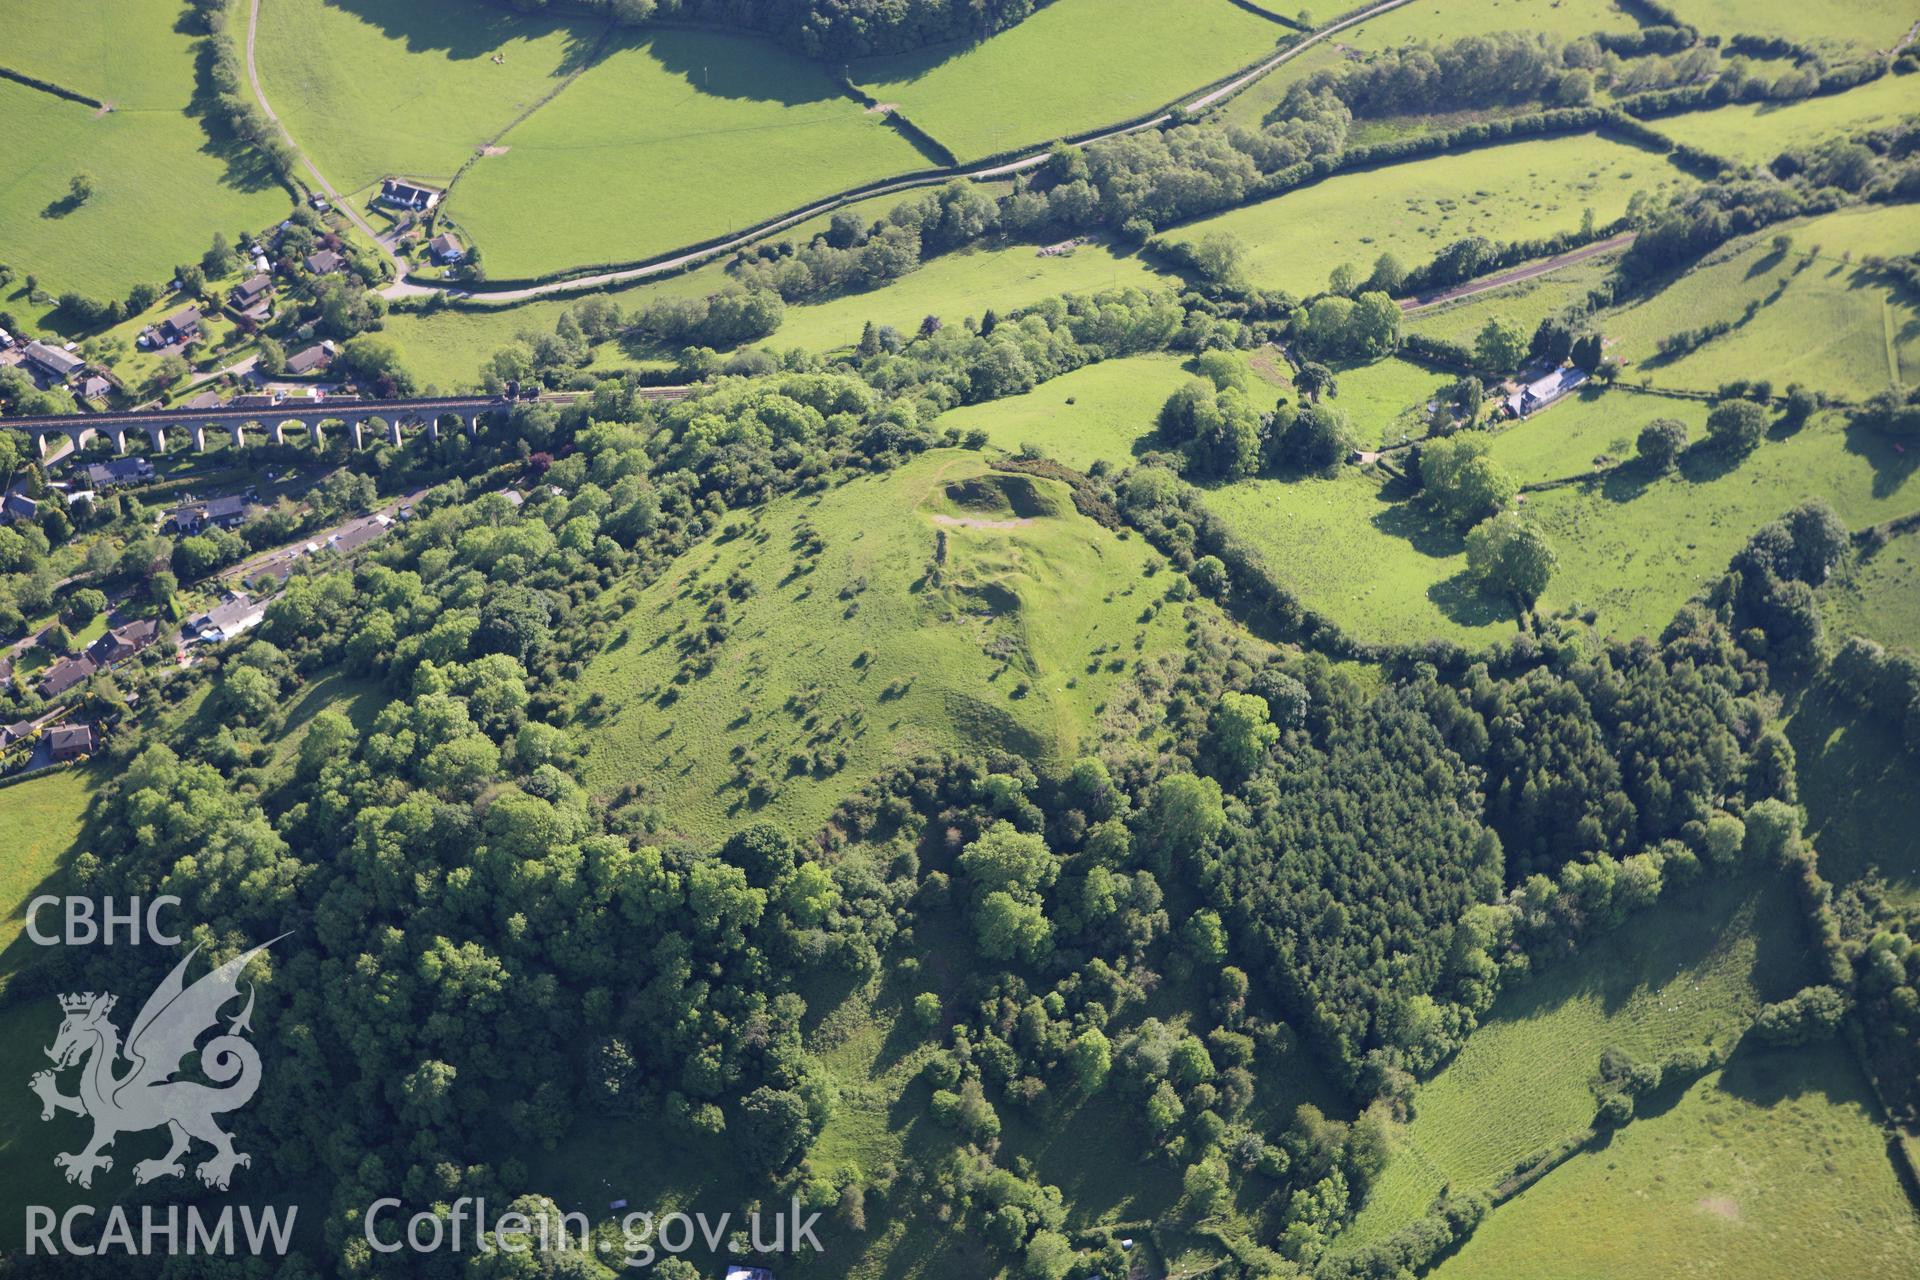 RCAHMW colour oblique aerial photograph of Cnwclas Castle. Taken on 11 June 2009 by Toby Driver